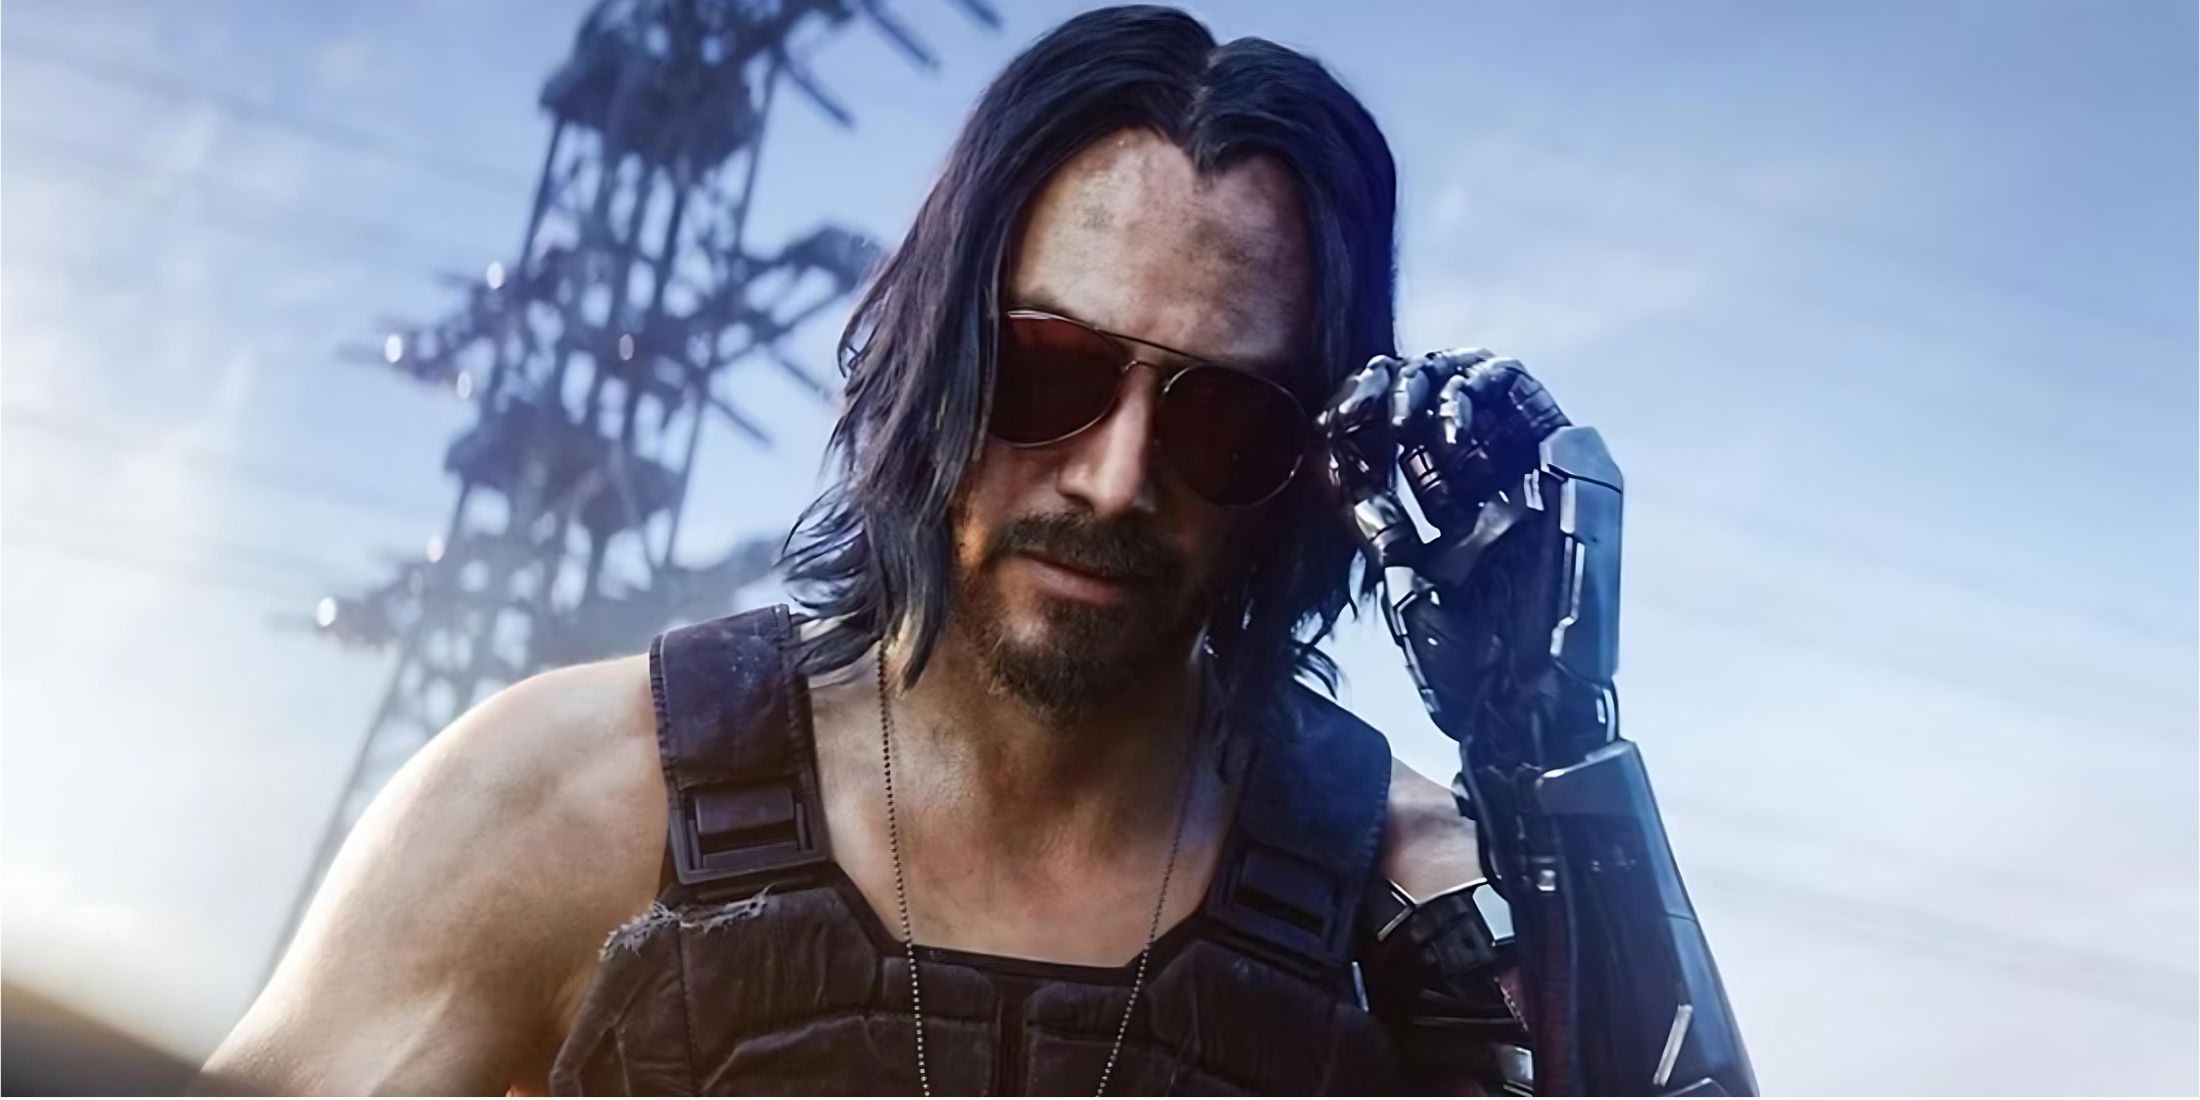 Keanu Reeves' character in Cyberpunk 2077